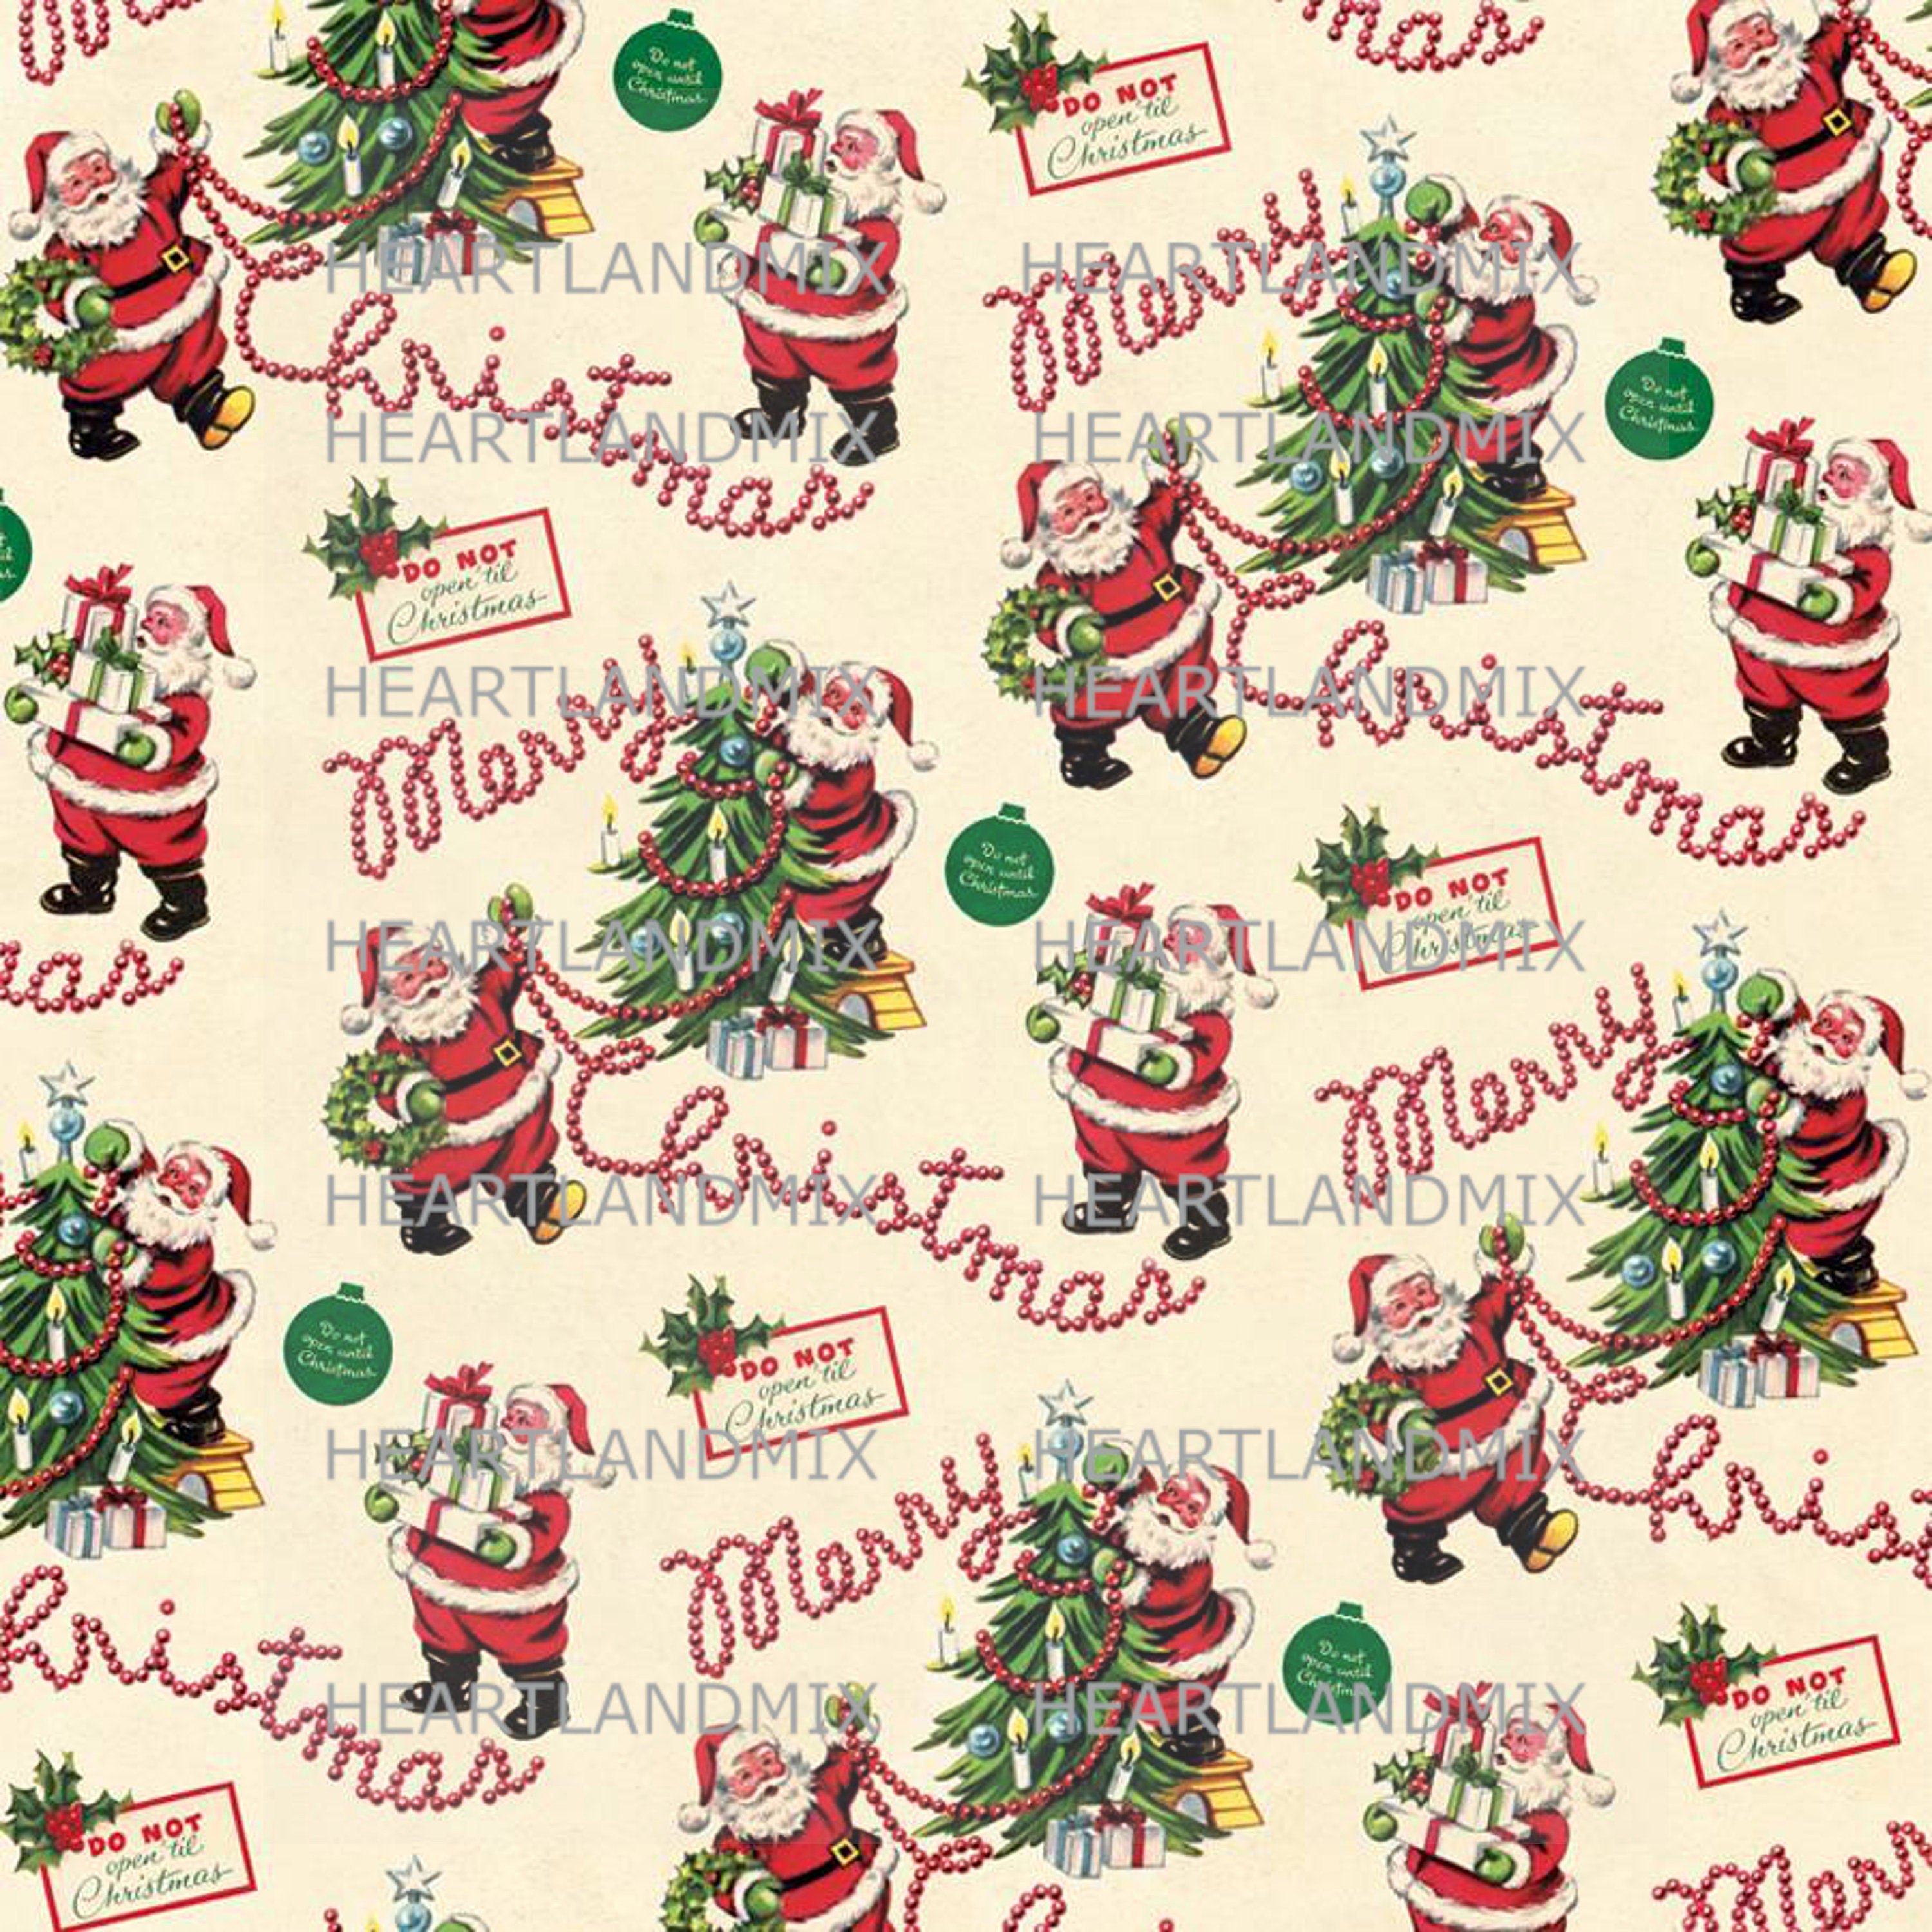 Pin by Mary on Fondos de pantalla  Personalised wrapping paper, Christmas wrapping  paper, Personalized gift wrap